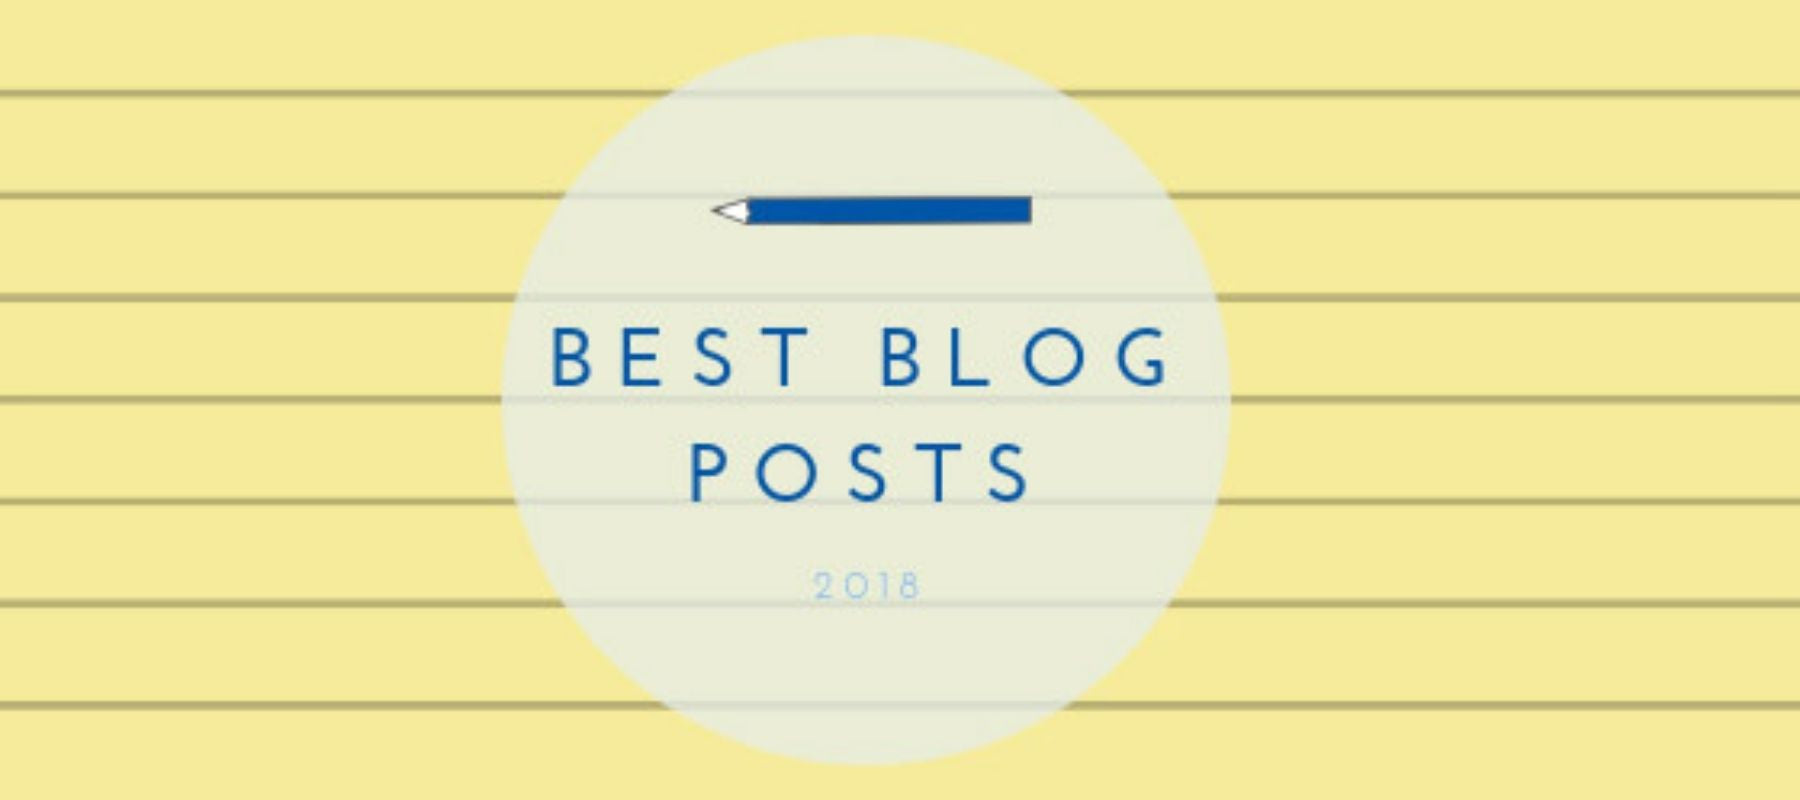 Myntz! Breathmints the best blog posts of 2018